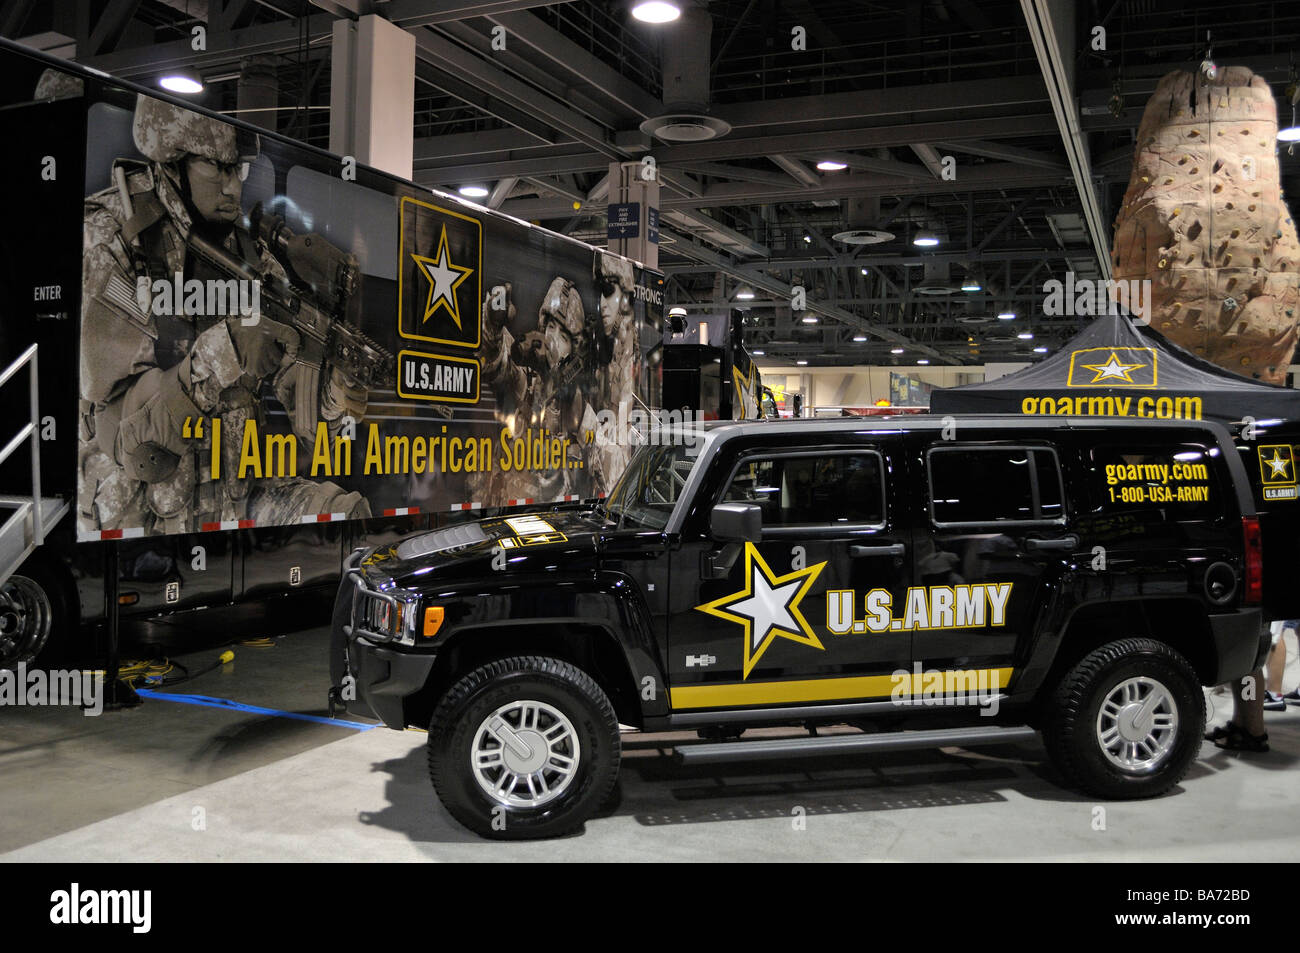 US Army exhibit to encourage recruitment for military service Stock Photo